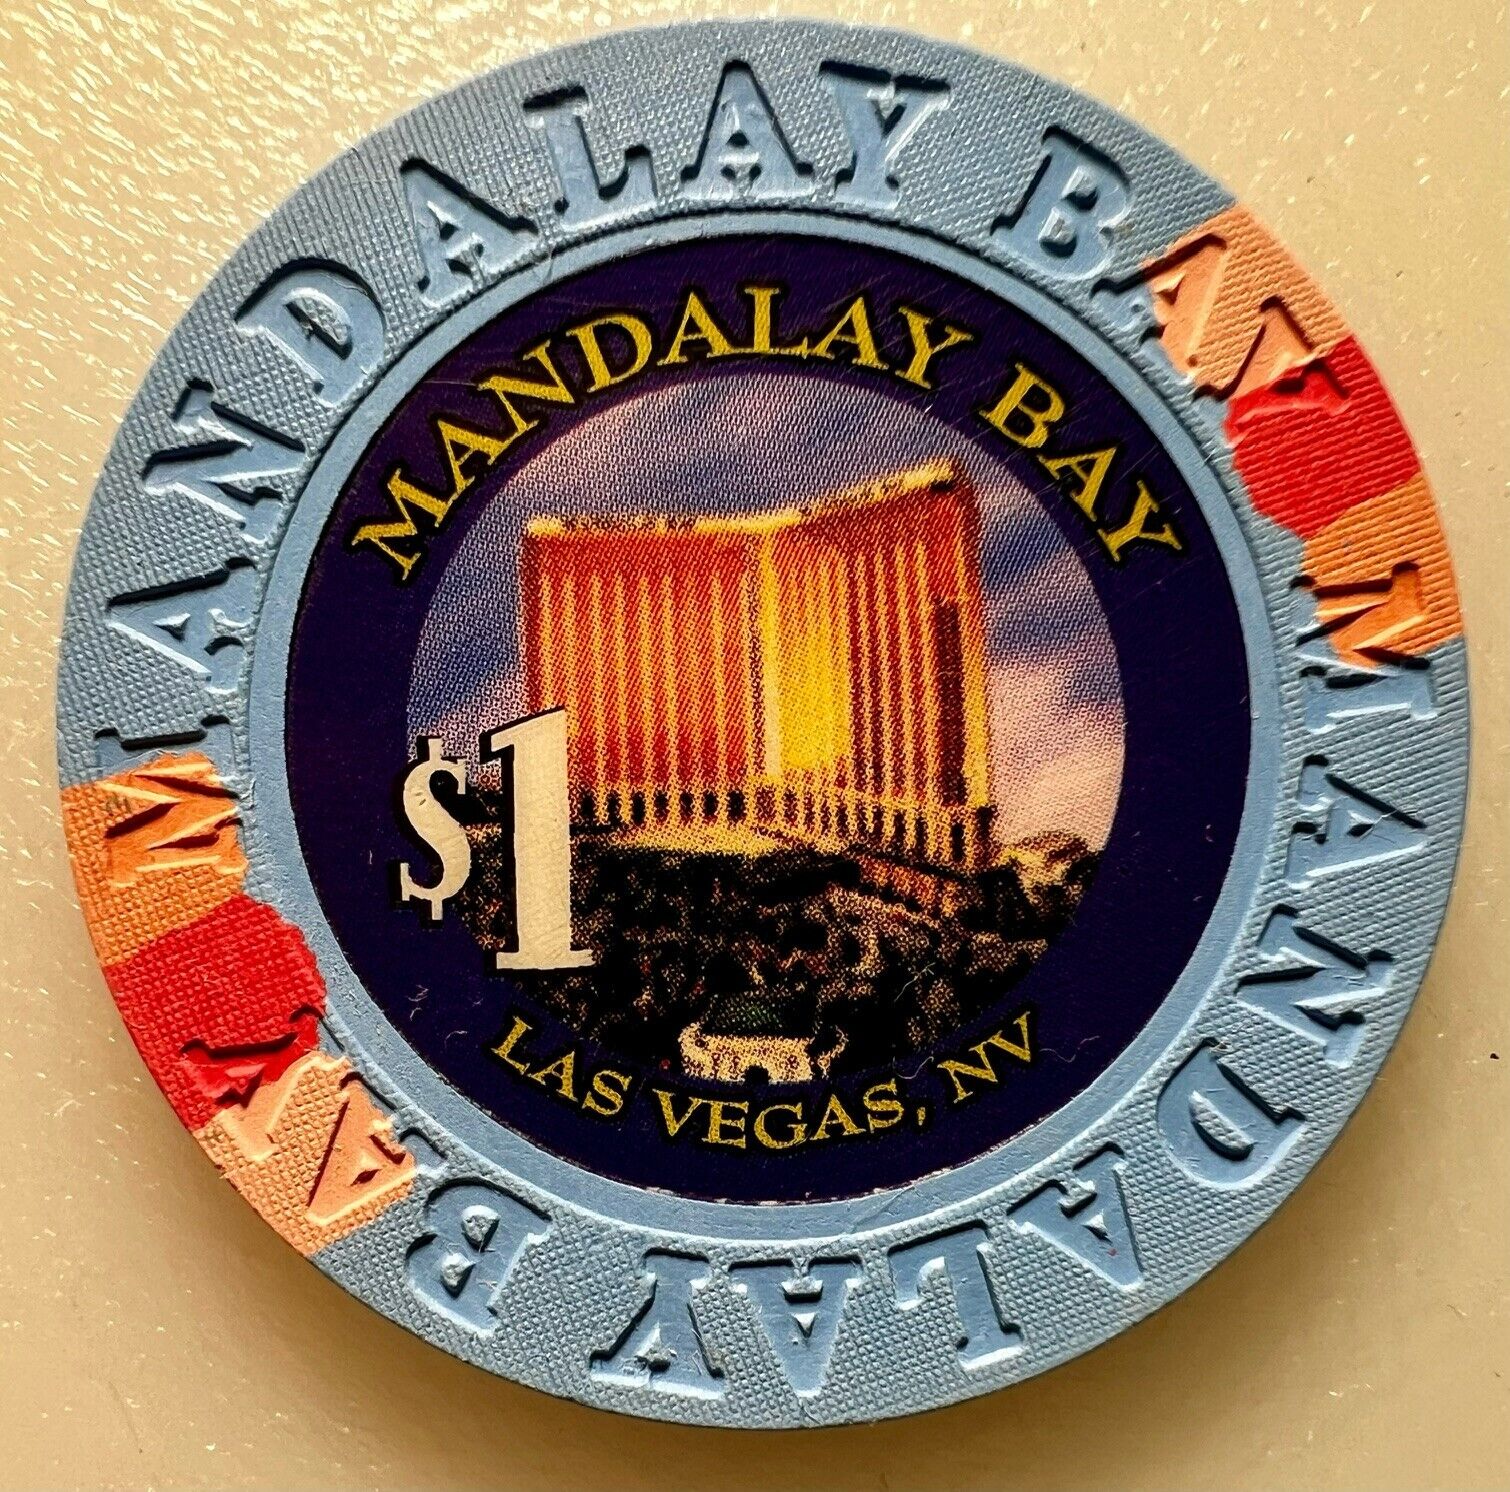 Mandalay Bay $1 Casino Chip, 1999 edition